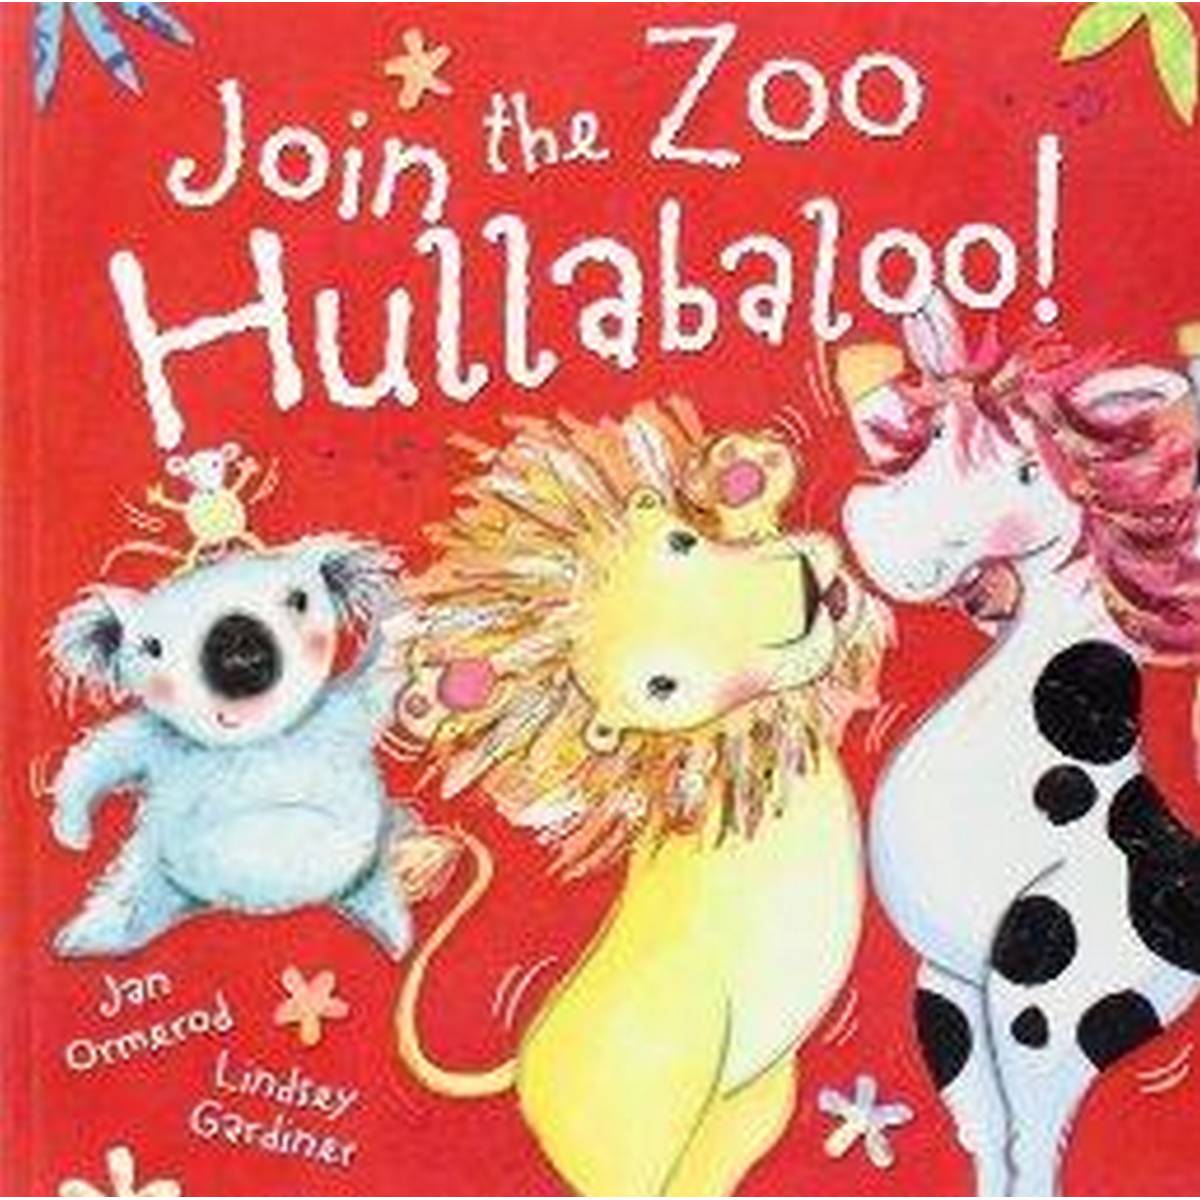 Join the Zoo Hullabaloo!